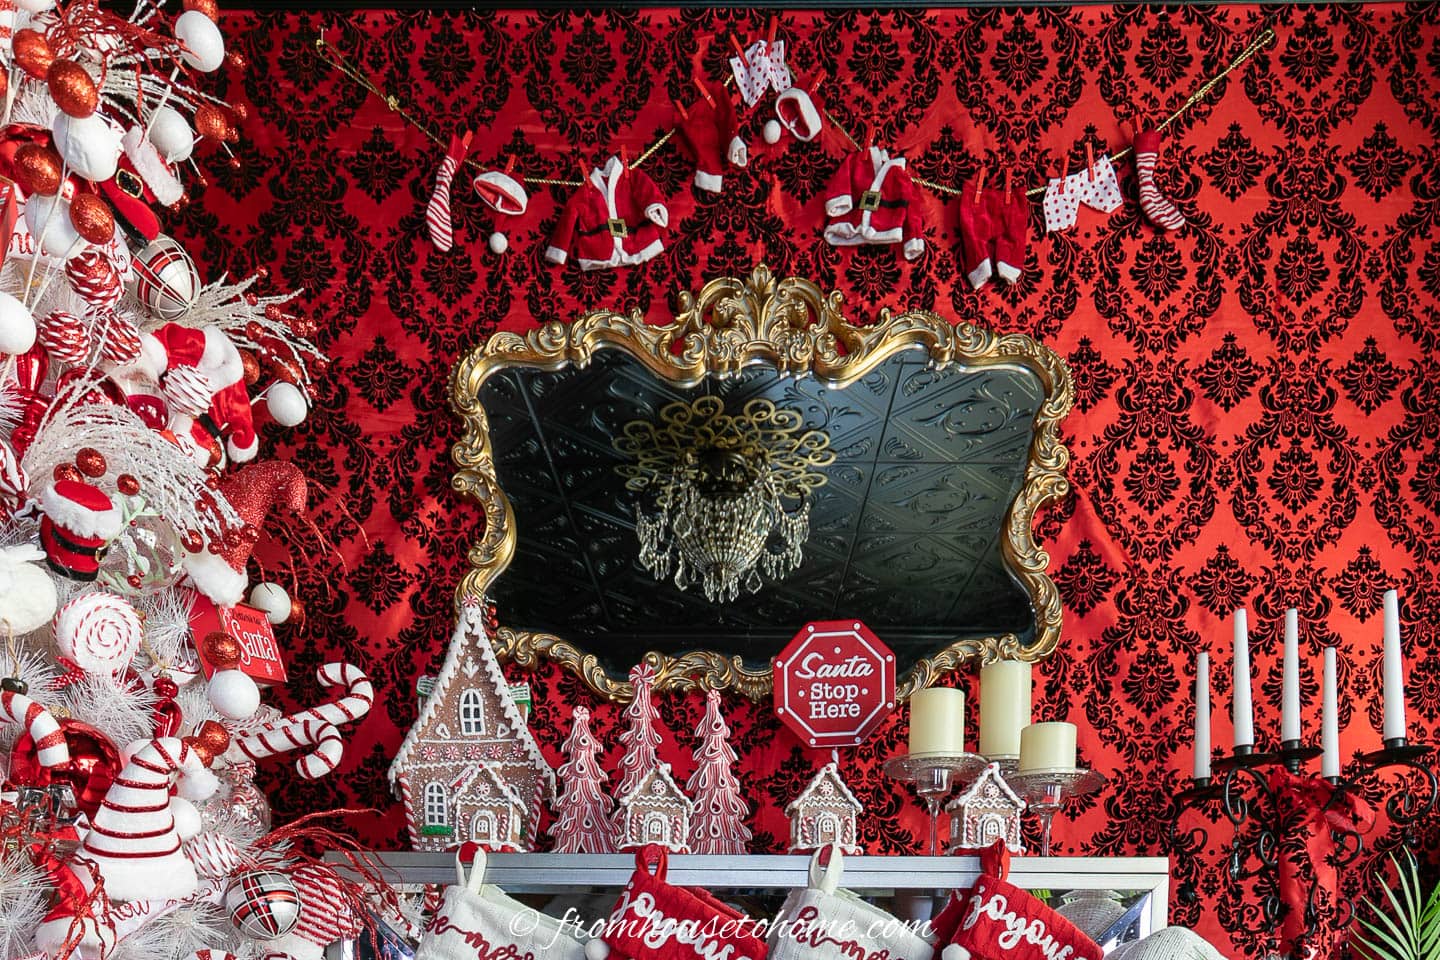 Santa clothesline garland hung above the fireplace mantel beside the Santa Christmas tree